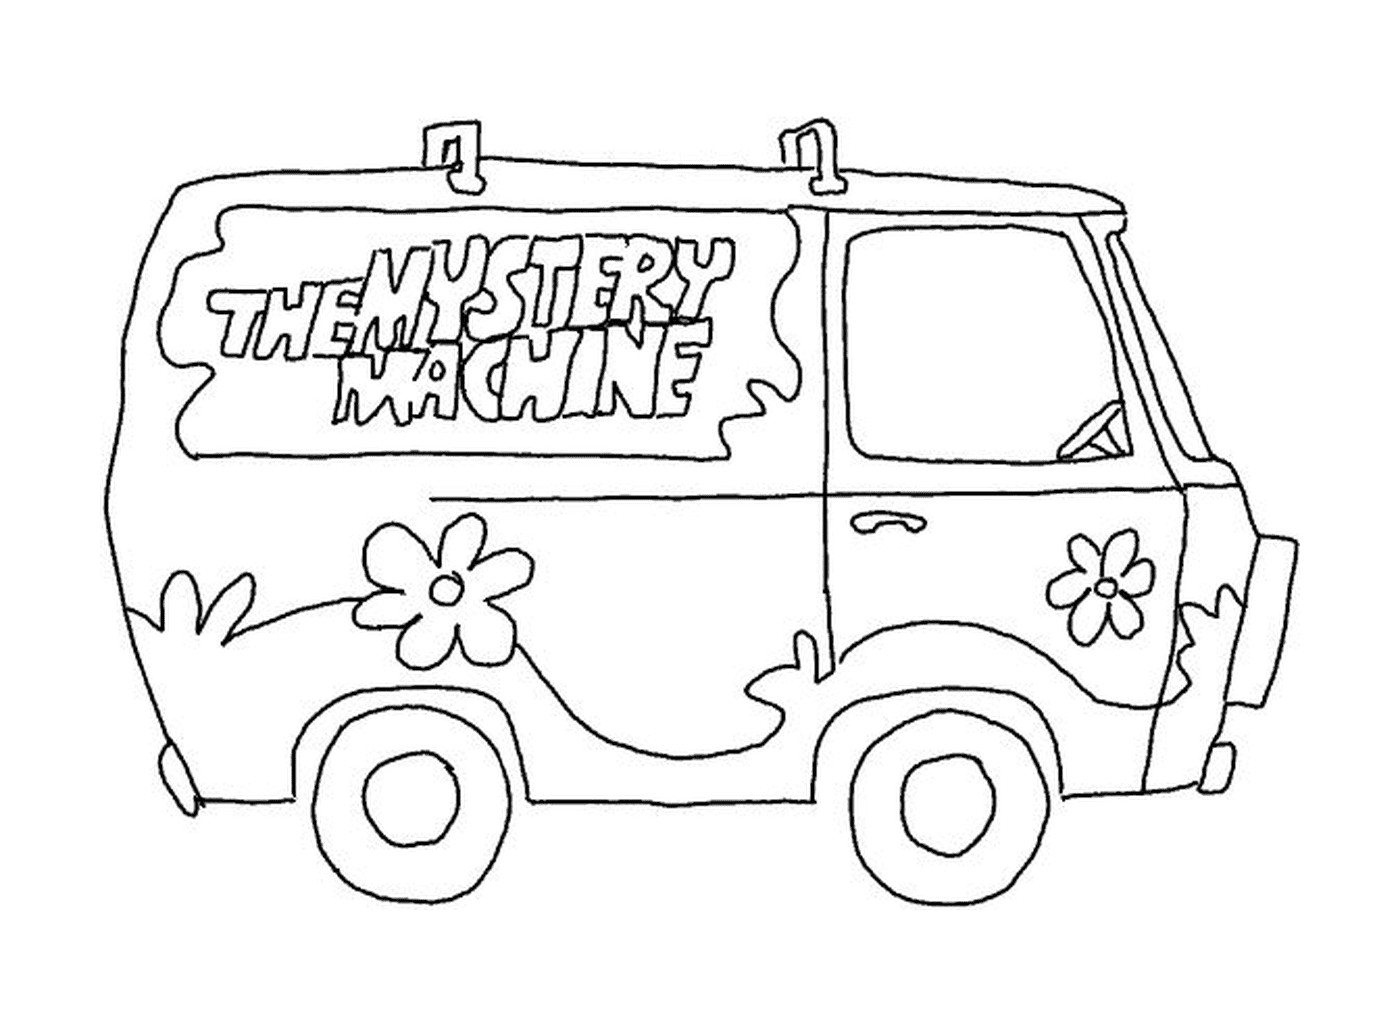  The Mystery Machine, the van 